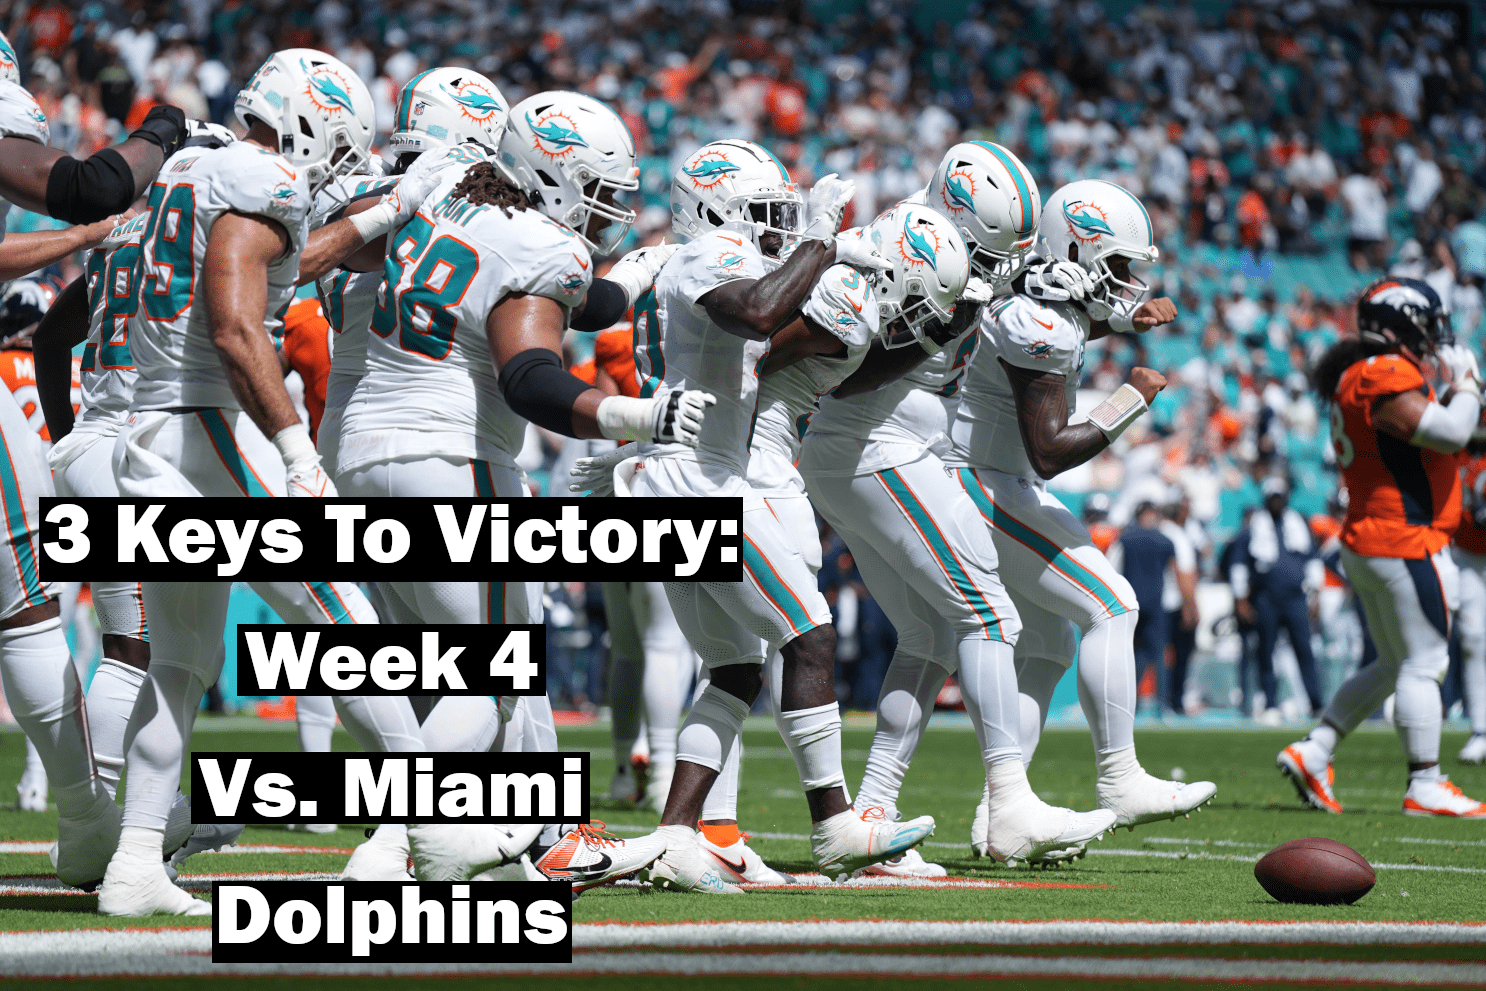 Buffalo Bills vs. Miami Dolphins: 3 Keys to victory for both teams